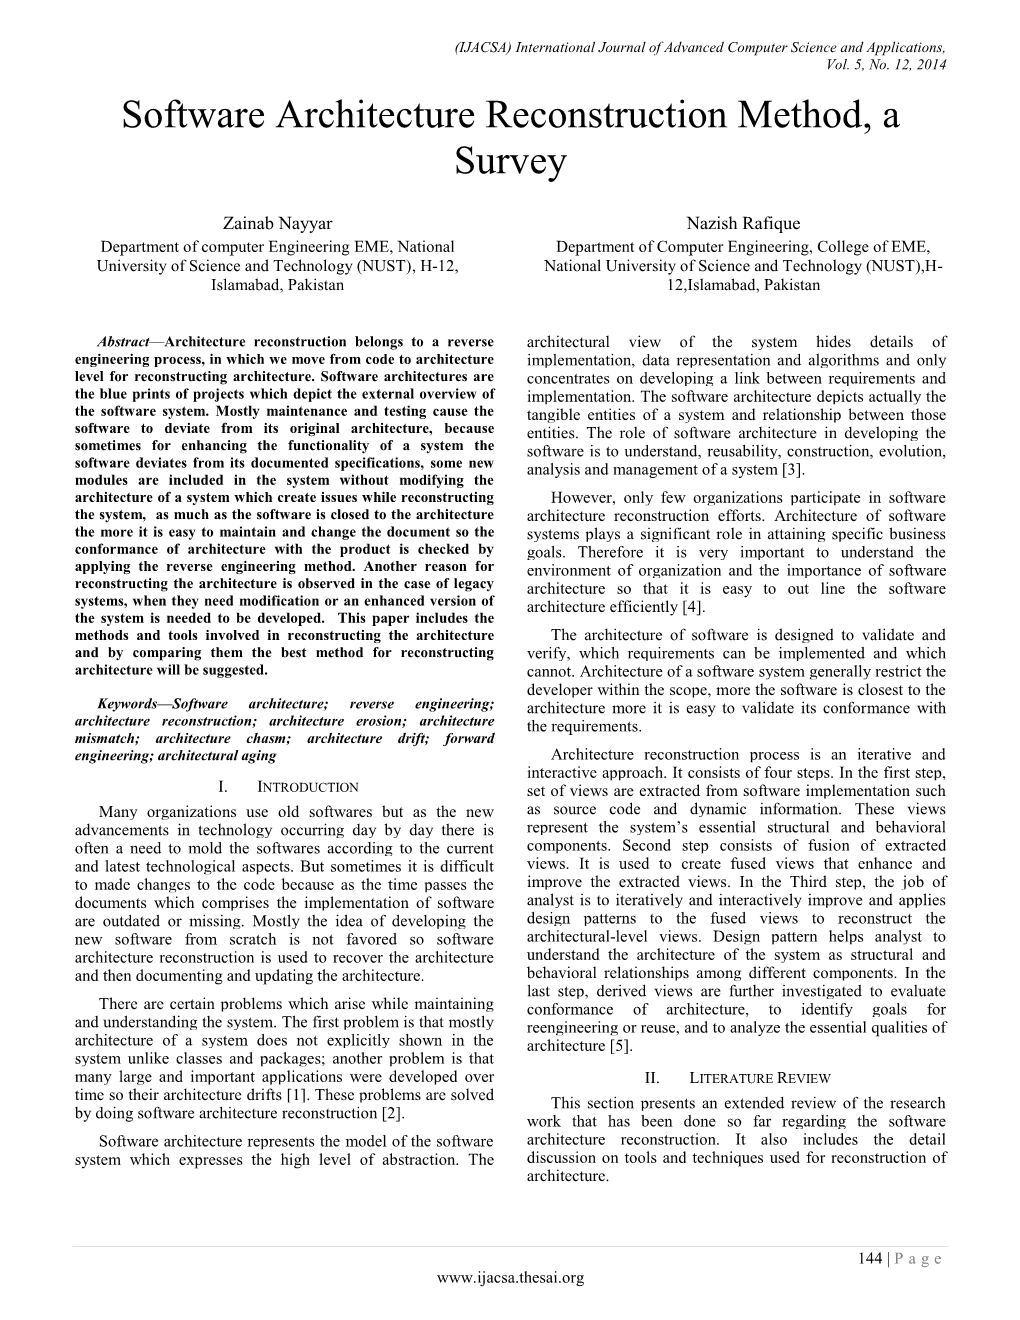 Software Architecture Reconstruction Method, a Survey